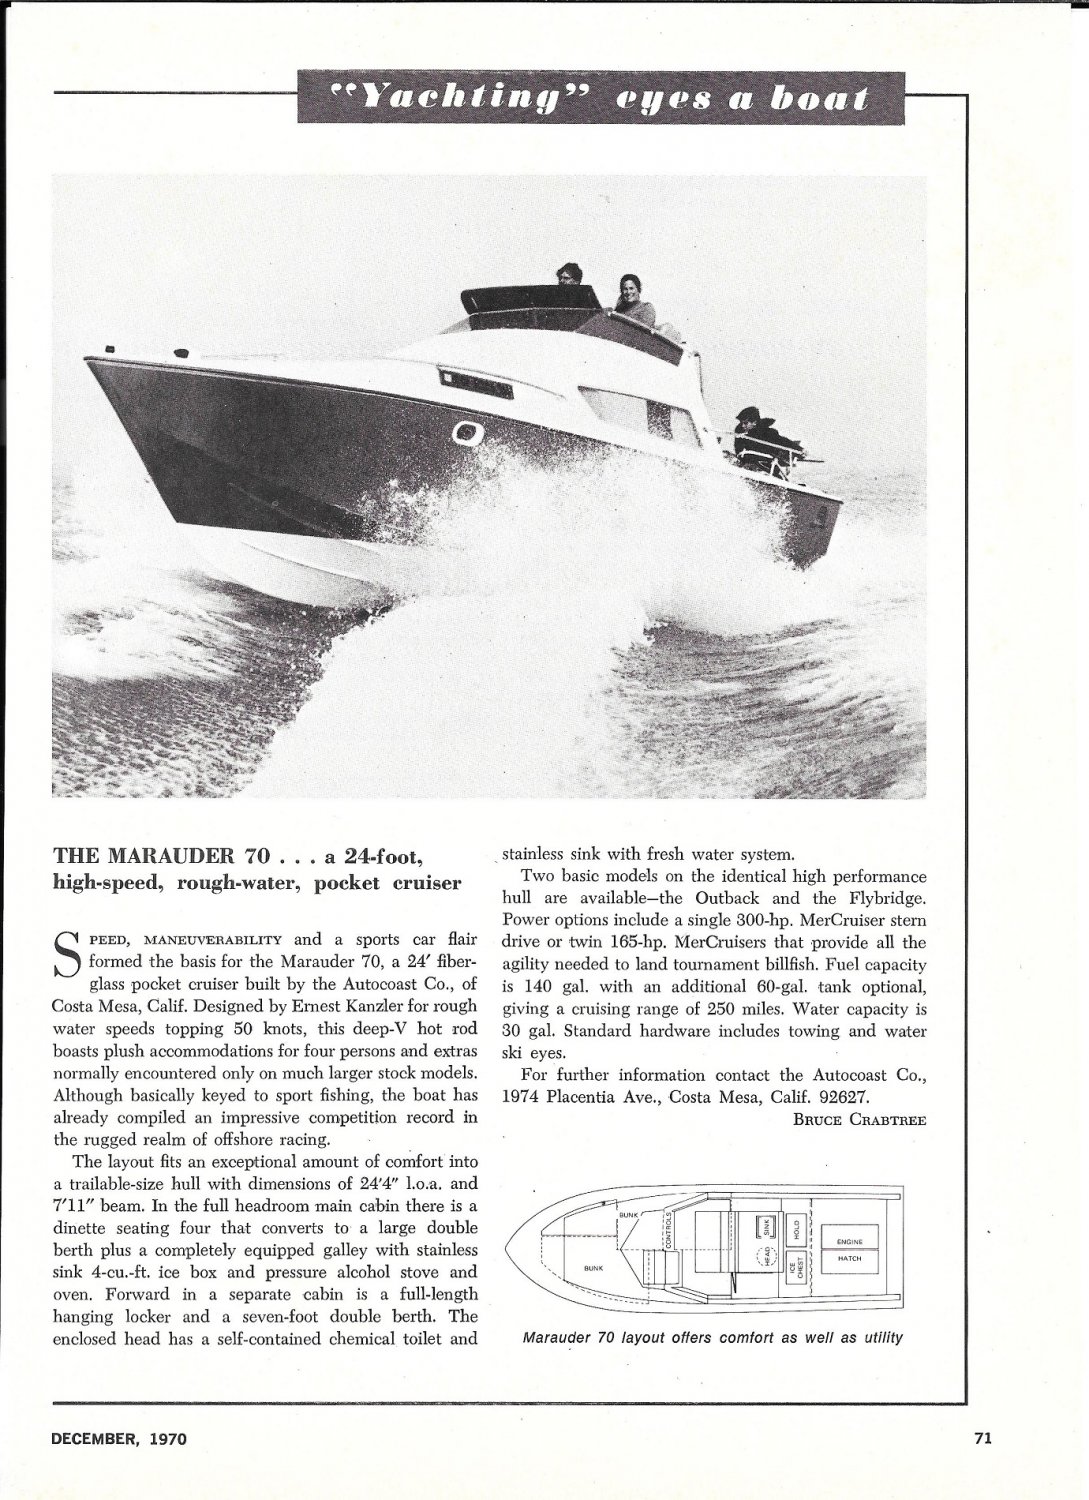 1970 Autocoast Co Marauder 70 Yacht Review- Nice Photo